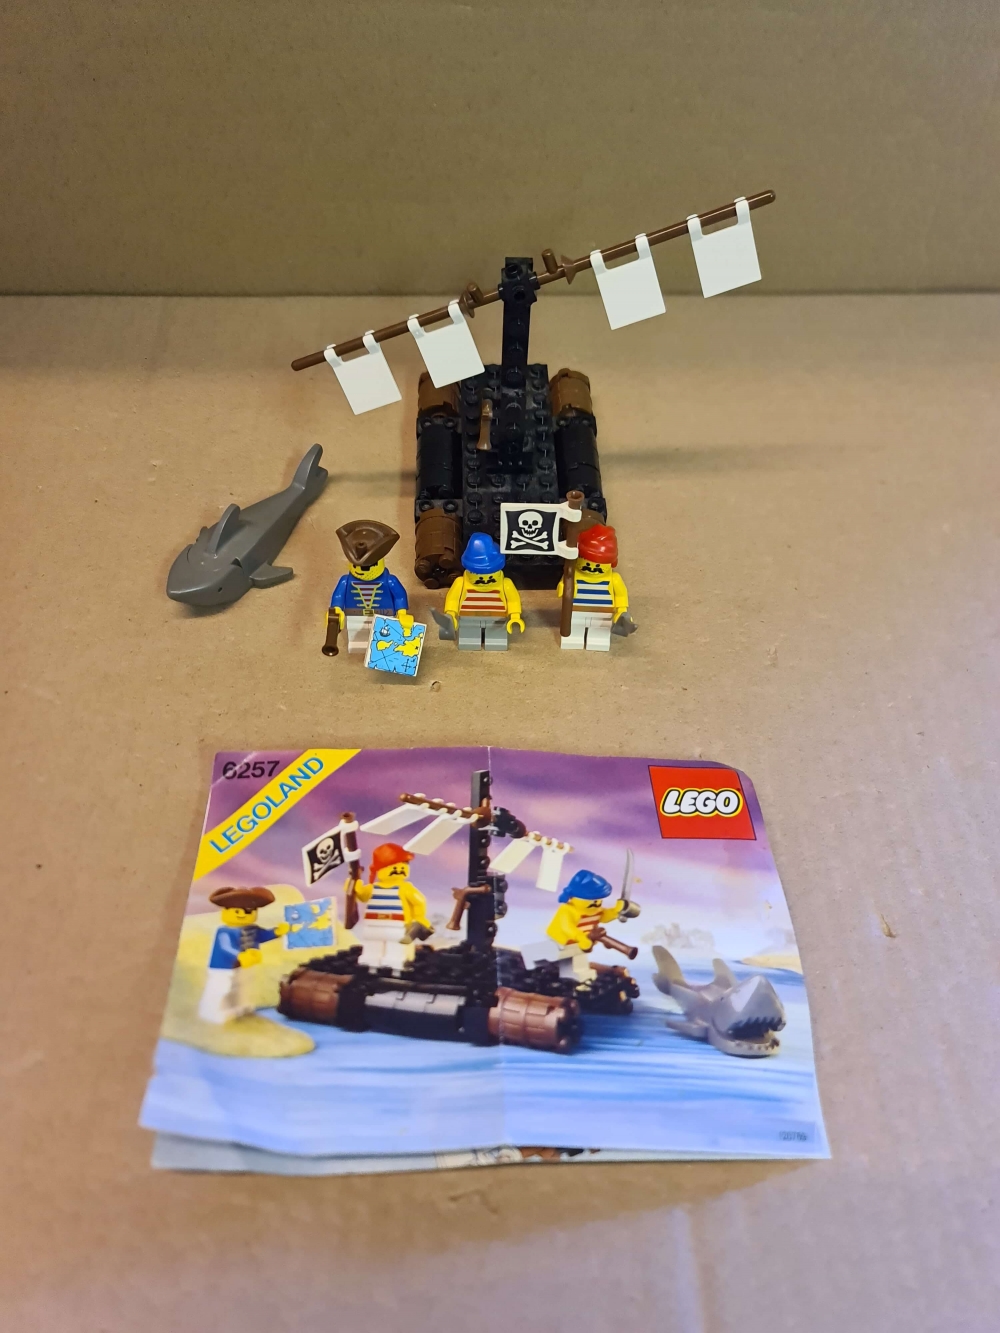 Sett 6257 fra Lego Pirates : Pirates 1 serien.
Komplett flott sett med manual. 